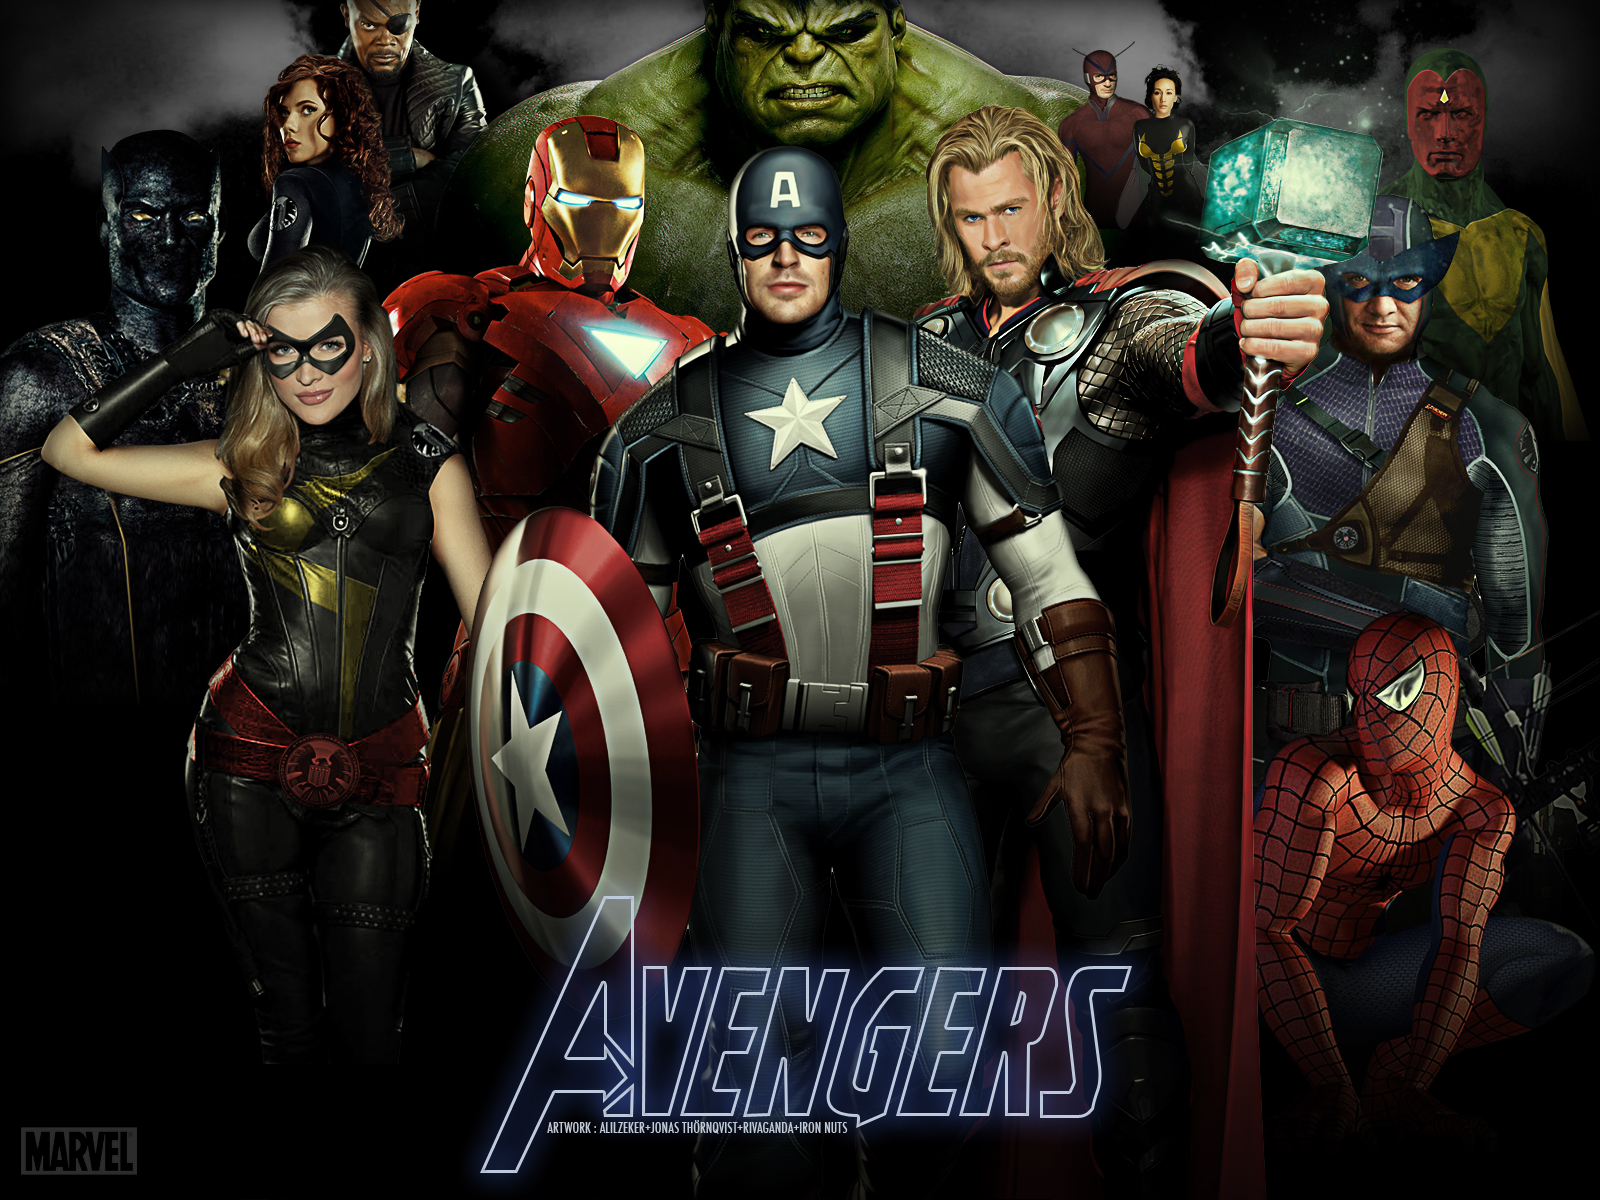 https://blogger.googleusercontent.com/img/b/R29vZ2xl/AVvXsEj23H-_LbH15ssAOyfGPHdAlct4MNgKxLM9v51VP3hubNMpfSnAbYNUOlo6aeFIpDAURR1SkhzAYgF1bxjOHb2kOpMnNngezWeli5fl1cs7uugzT9yloutze2R0lWLJMF-4Wa9iQDsKJNCh/s1600/Watch+The+Avengers+2012+Full+English+Movie+Online_wallpapers_images_posters.jpg